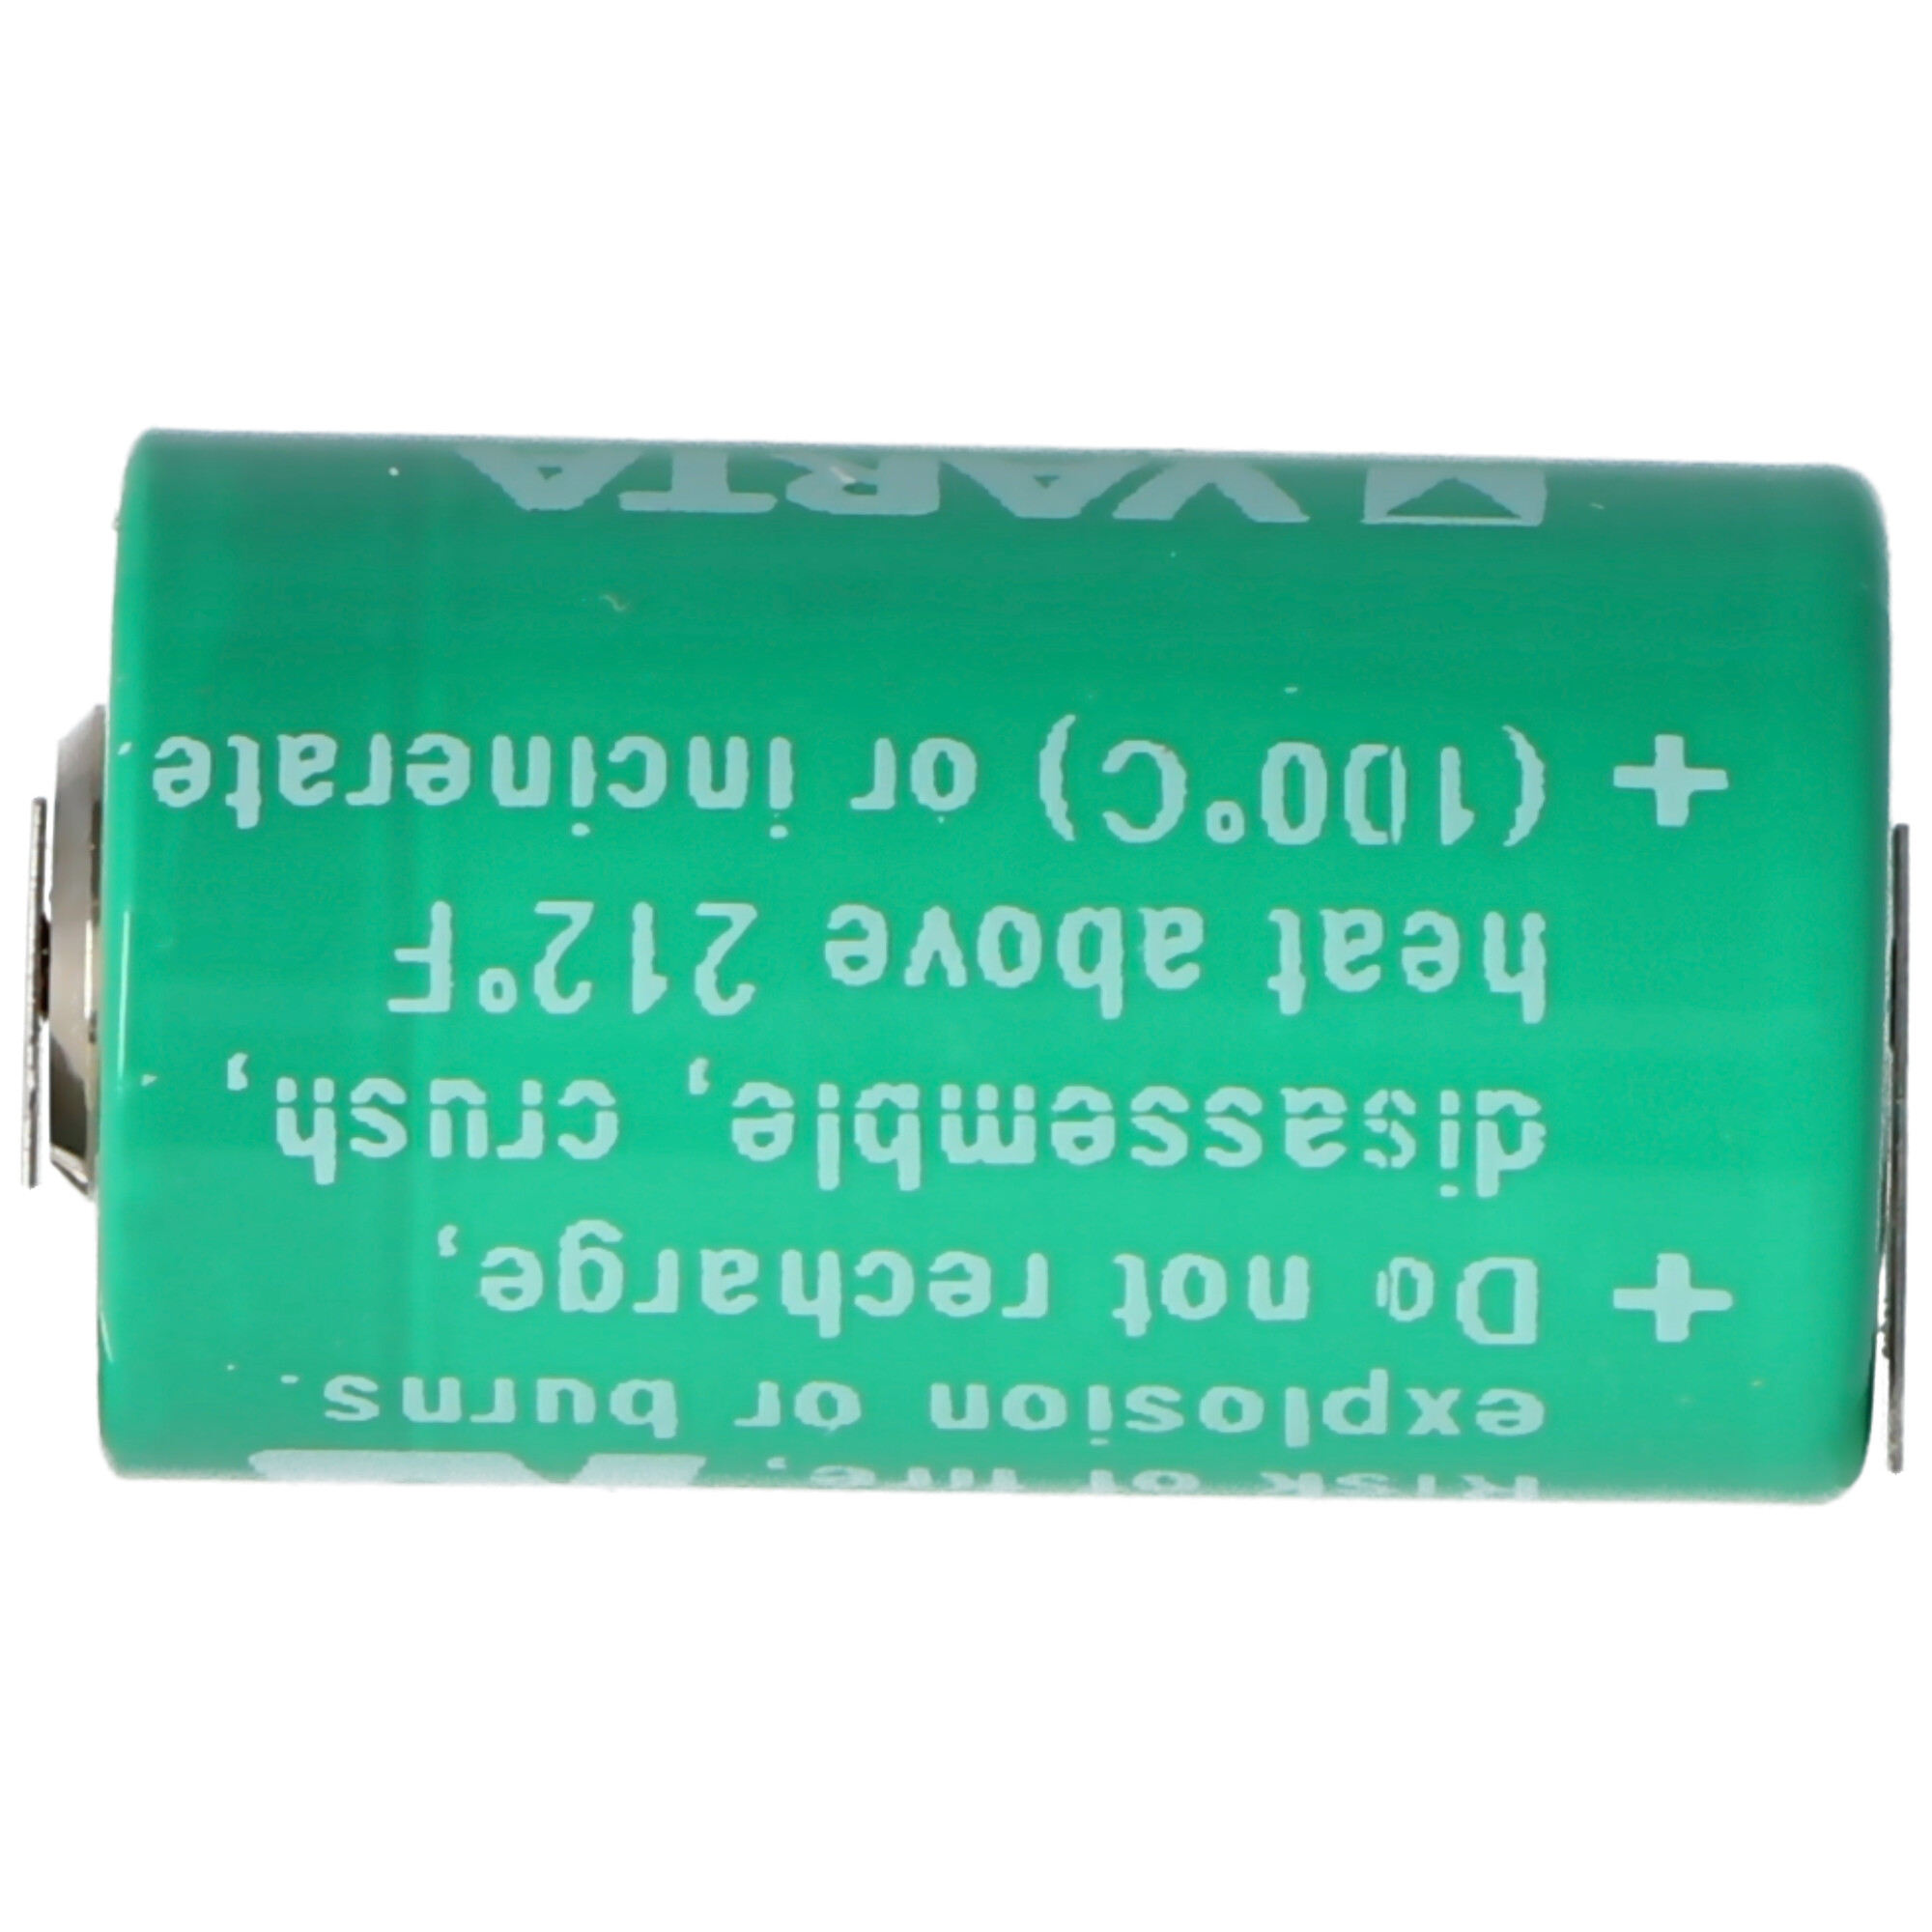 Varta CR1/2AA Lithium Batterie 6127 mit 1er Print Lötfahne